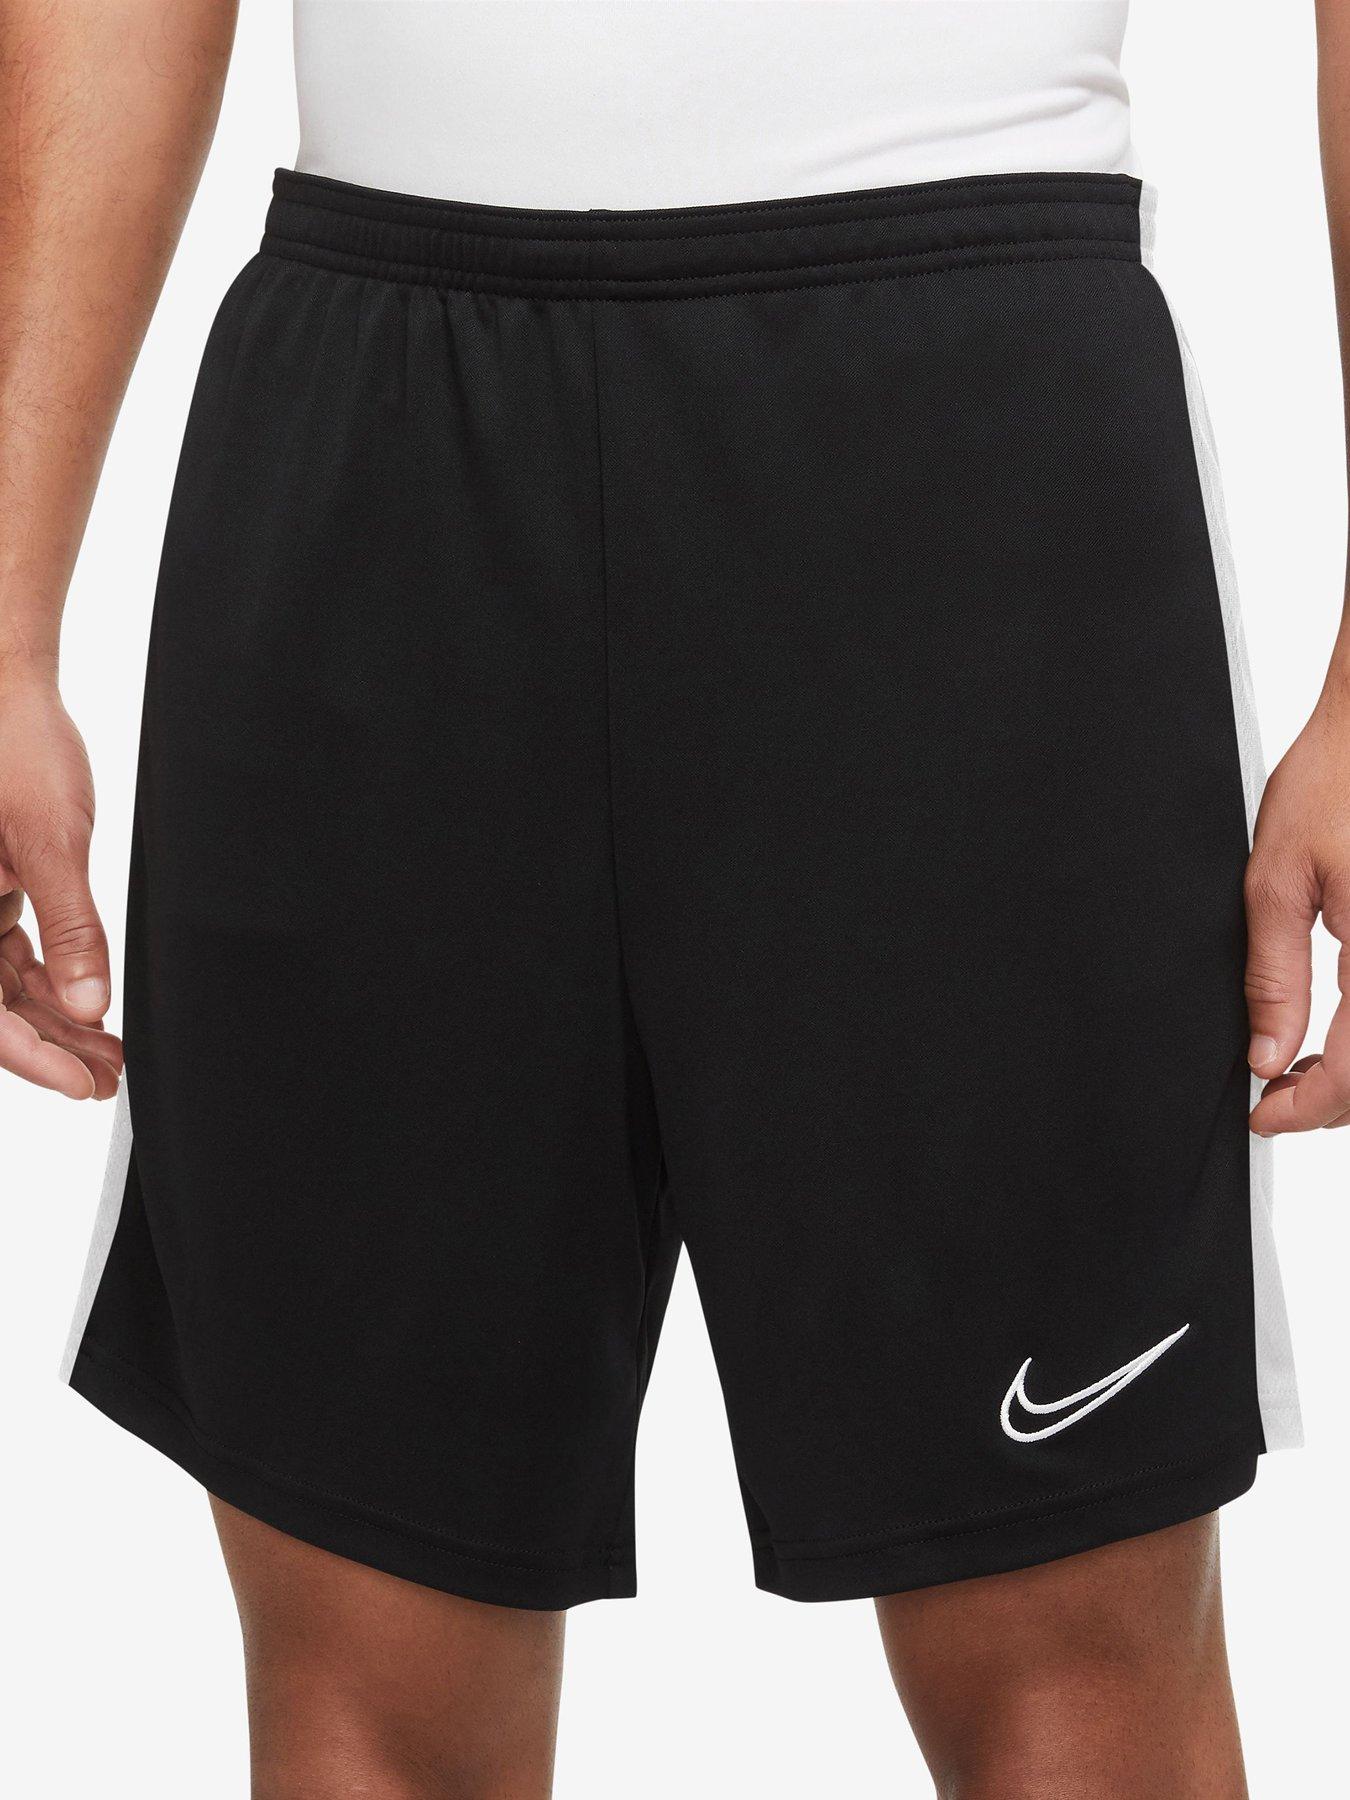 Men's Nike Shorts, Nike Dri Fit & Gym Shorts